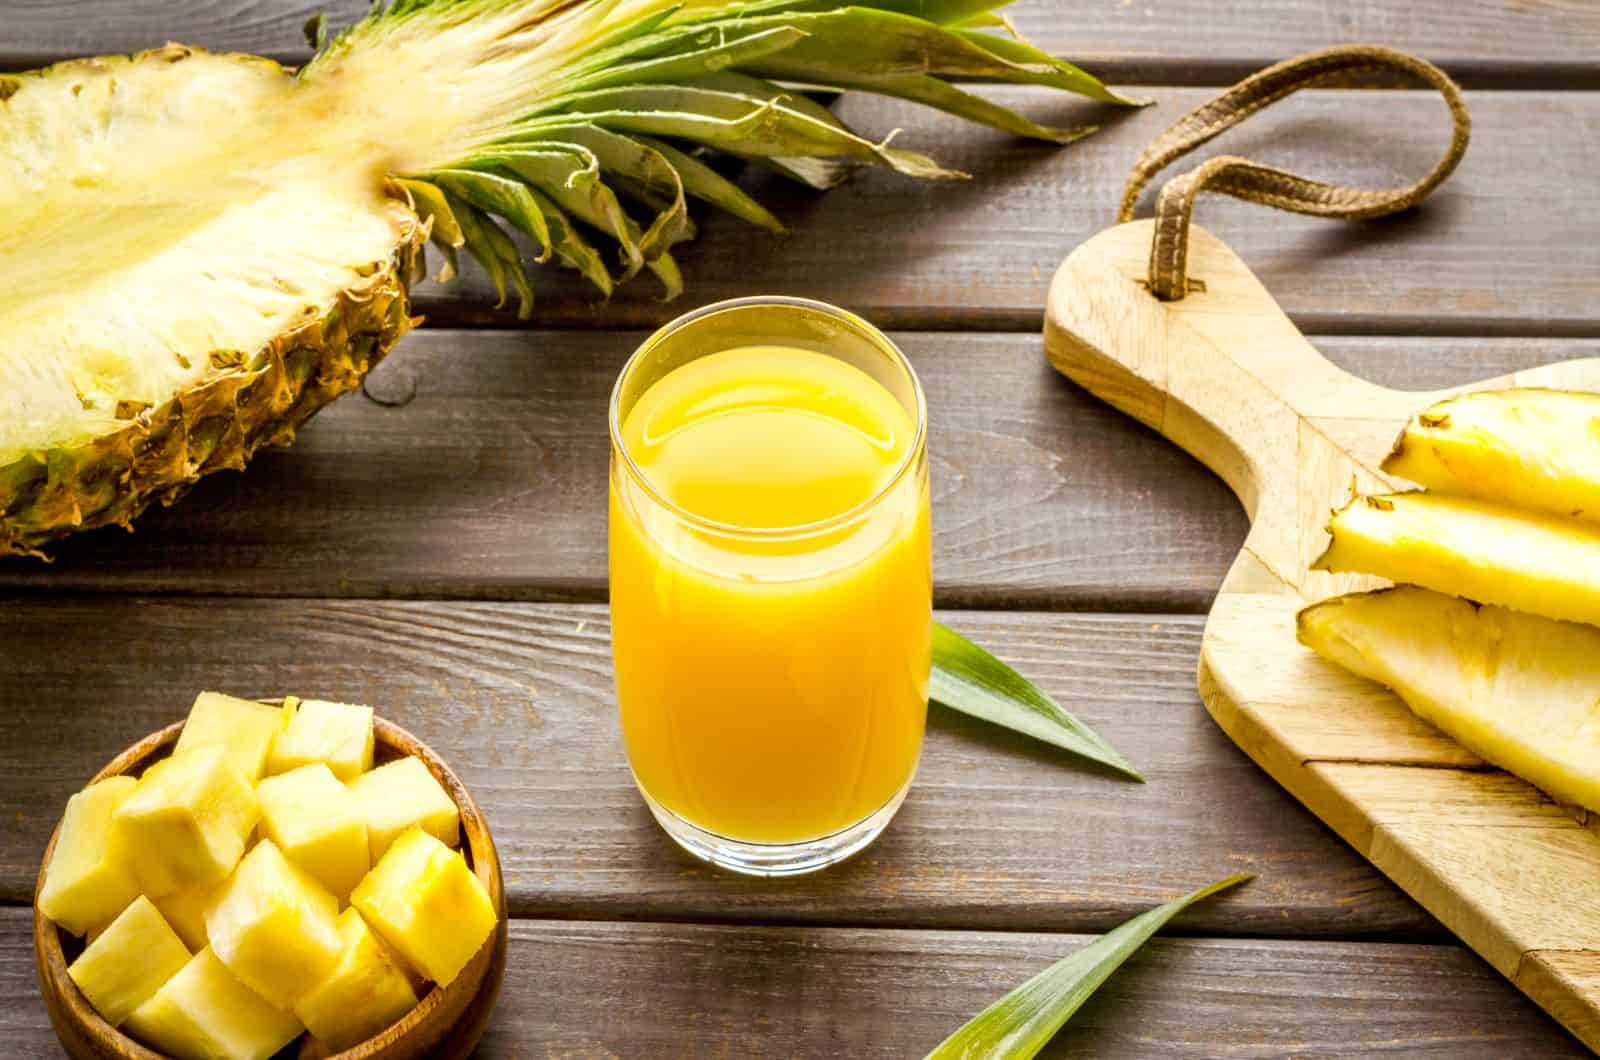 Pineapple Juice and Pineapple  sitting on table 